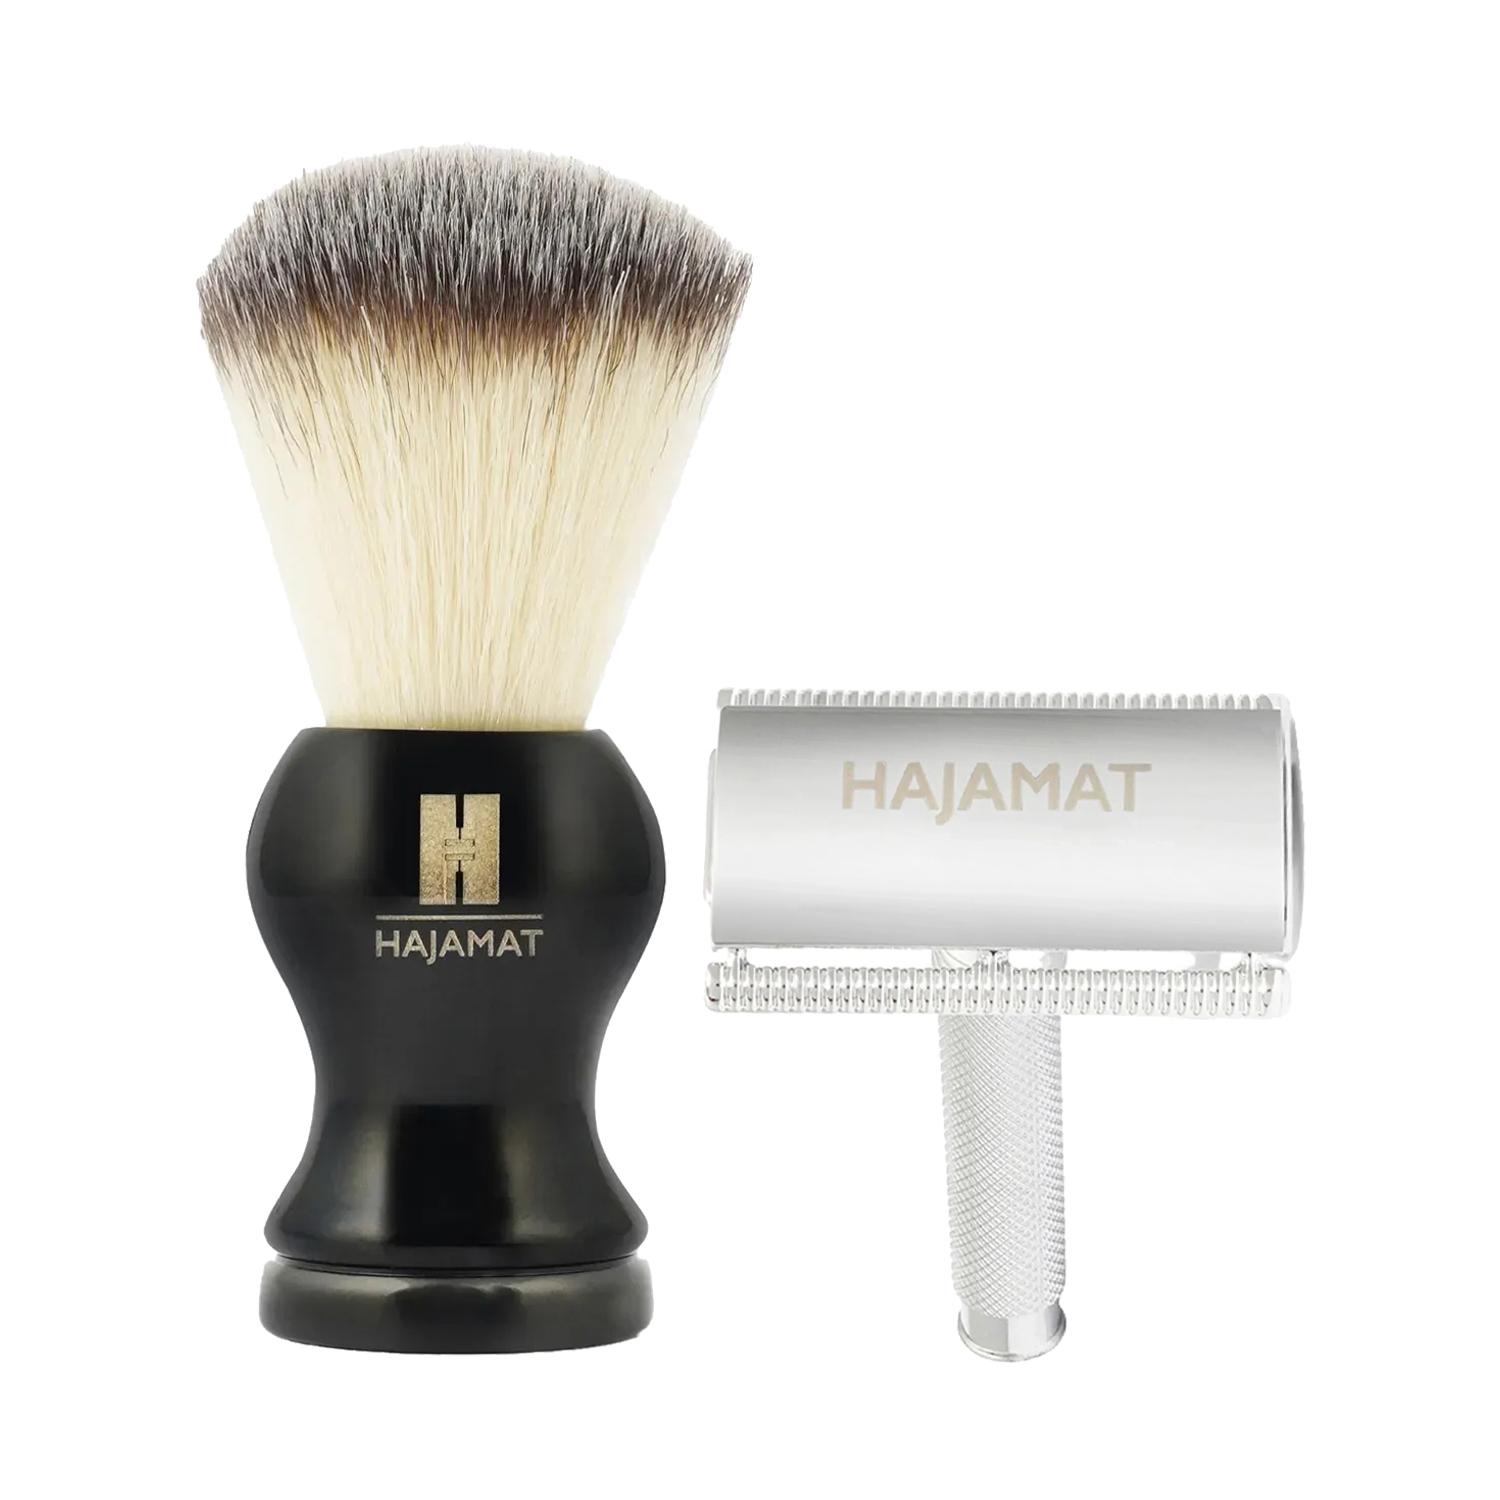 Hajamat Luxurious Black With Imitation Badger Hair Shaving Brush & Spade Safety Razor Combo